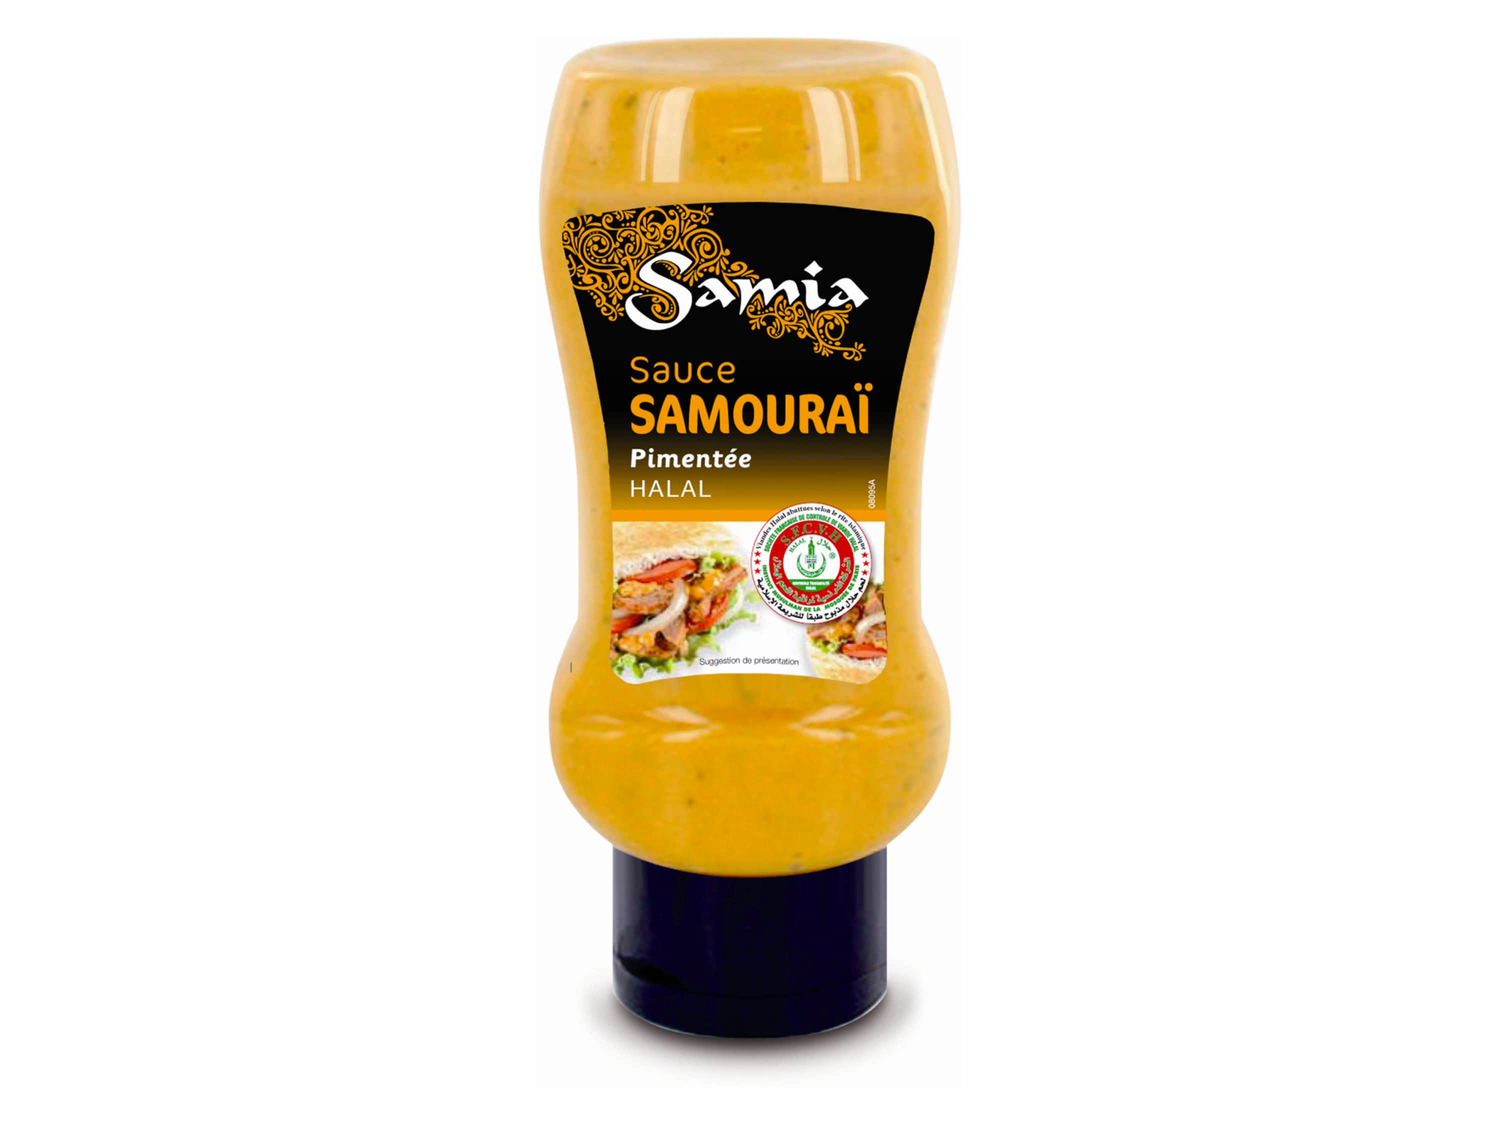 Samia sauce , le prix 1.50 €  
-  Au choix : Alger, samouraï ou blanche